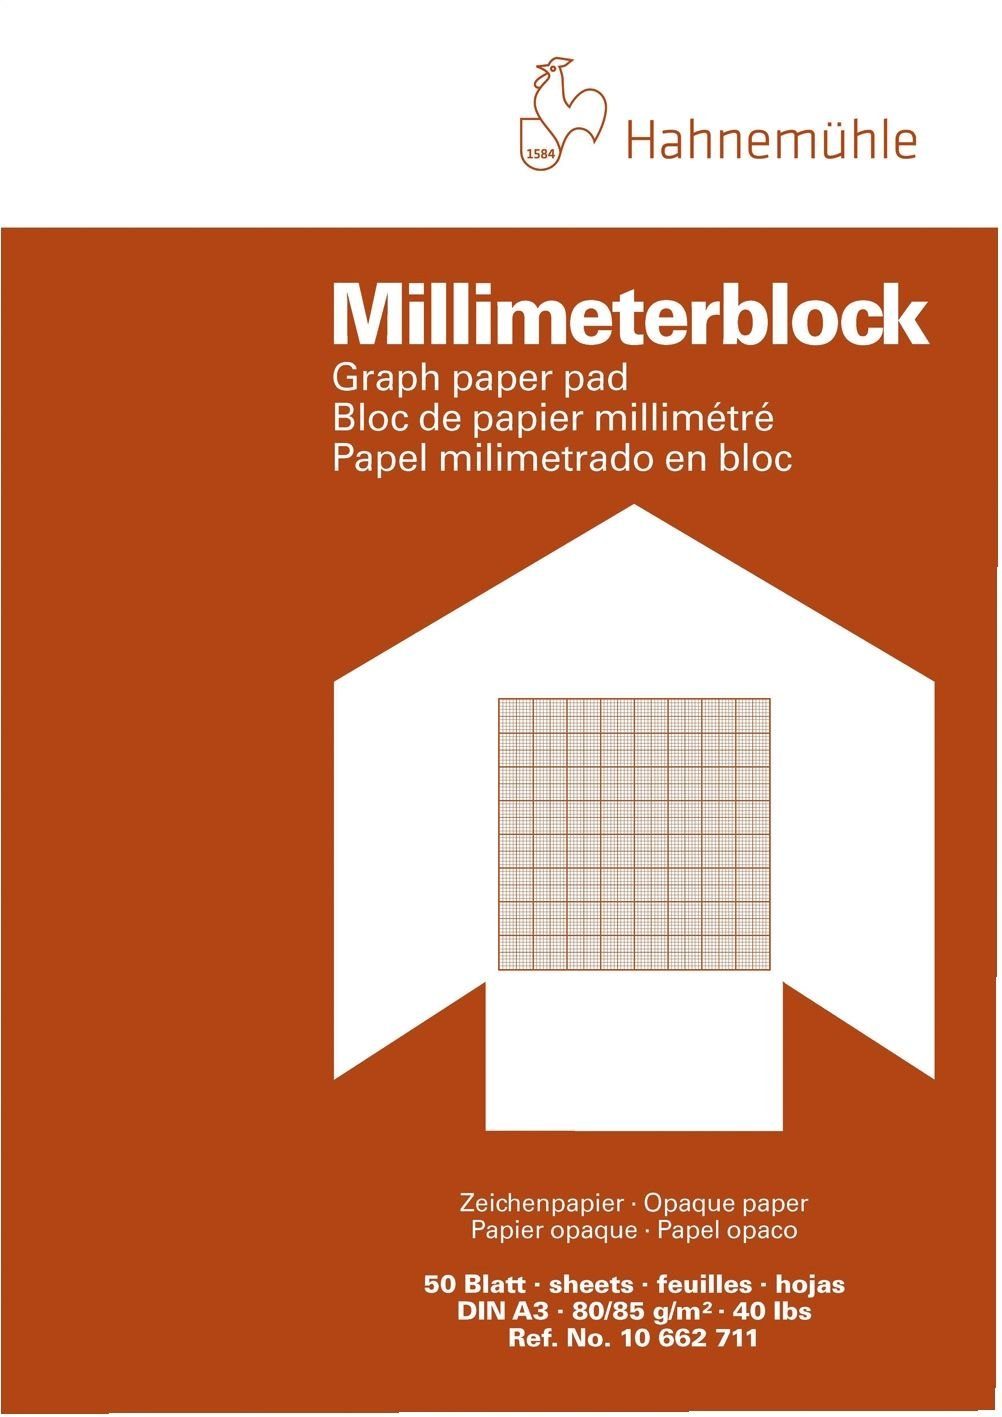 Hahnemühle Druckerpapier Millimeter - Block 50 Blatt, A3, 80 g/qm